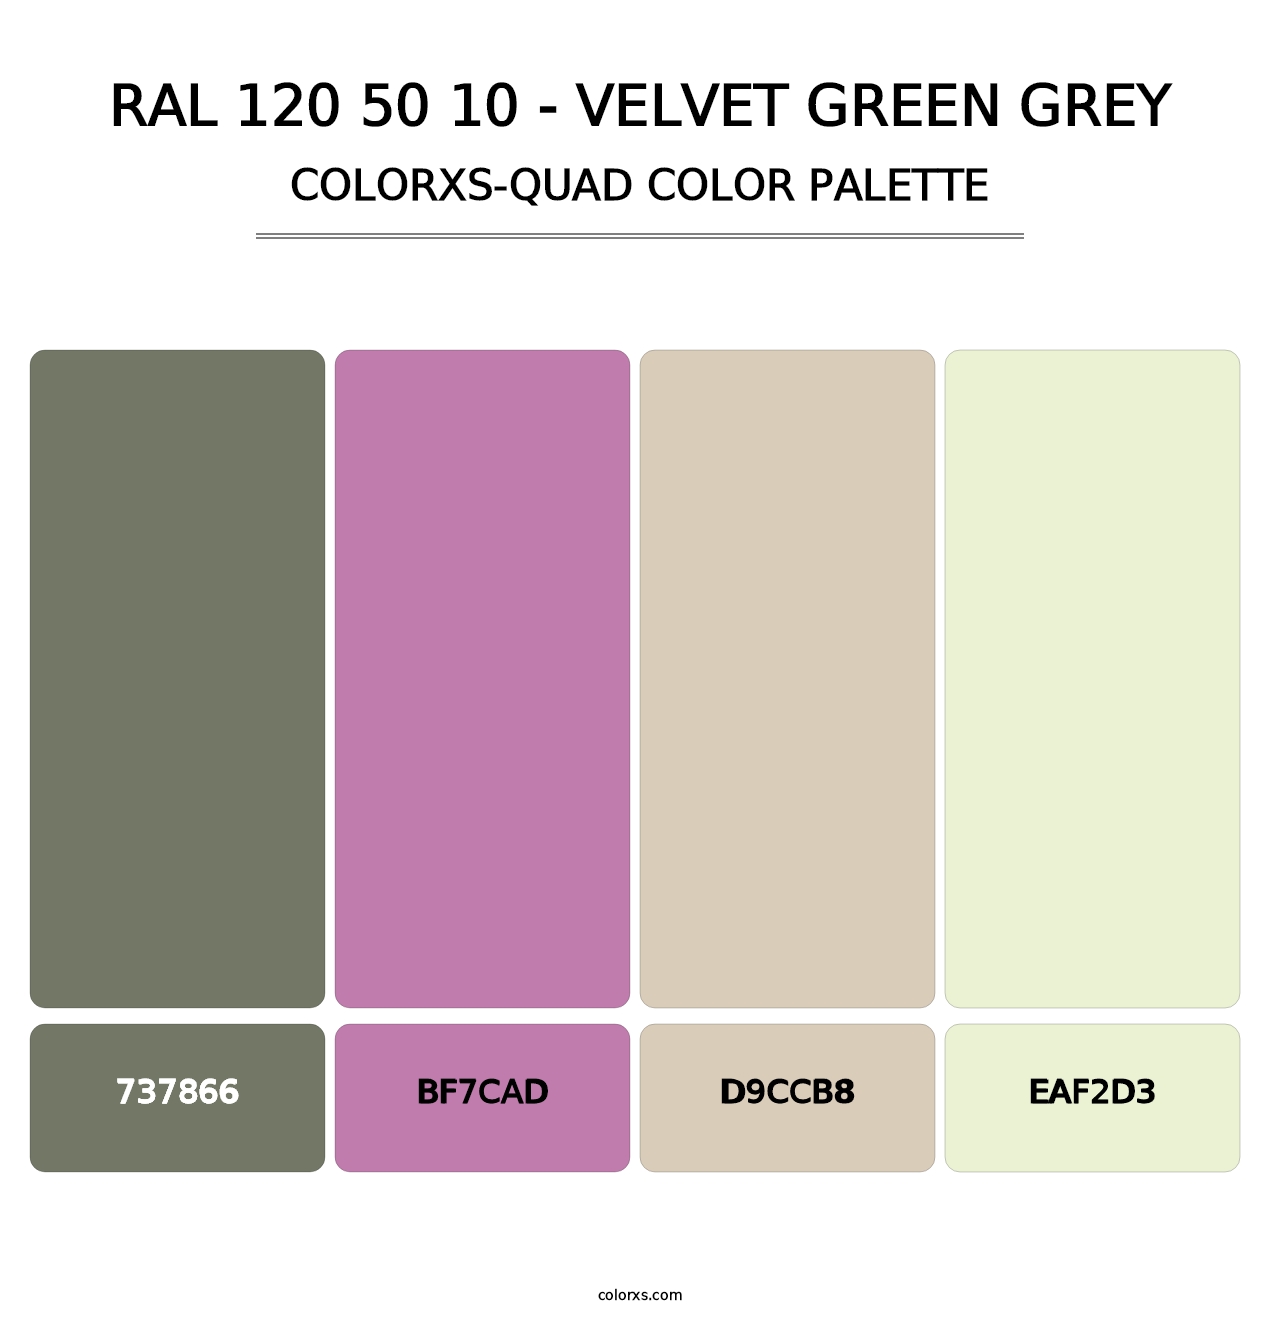 RAL 120 50 10 - Velvet Green Grey - Colorxs Quad Palette